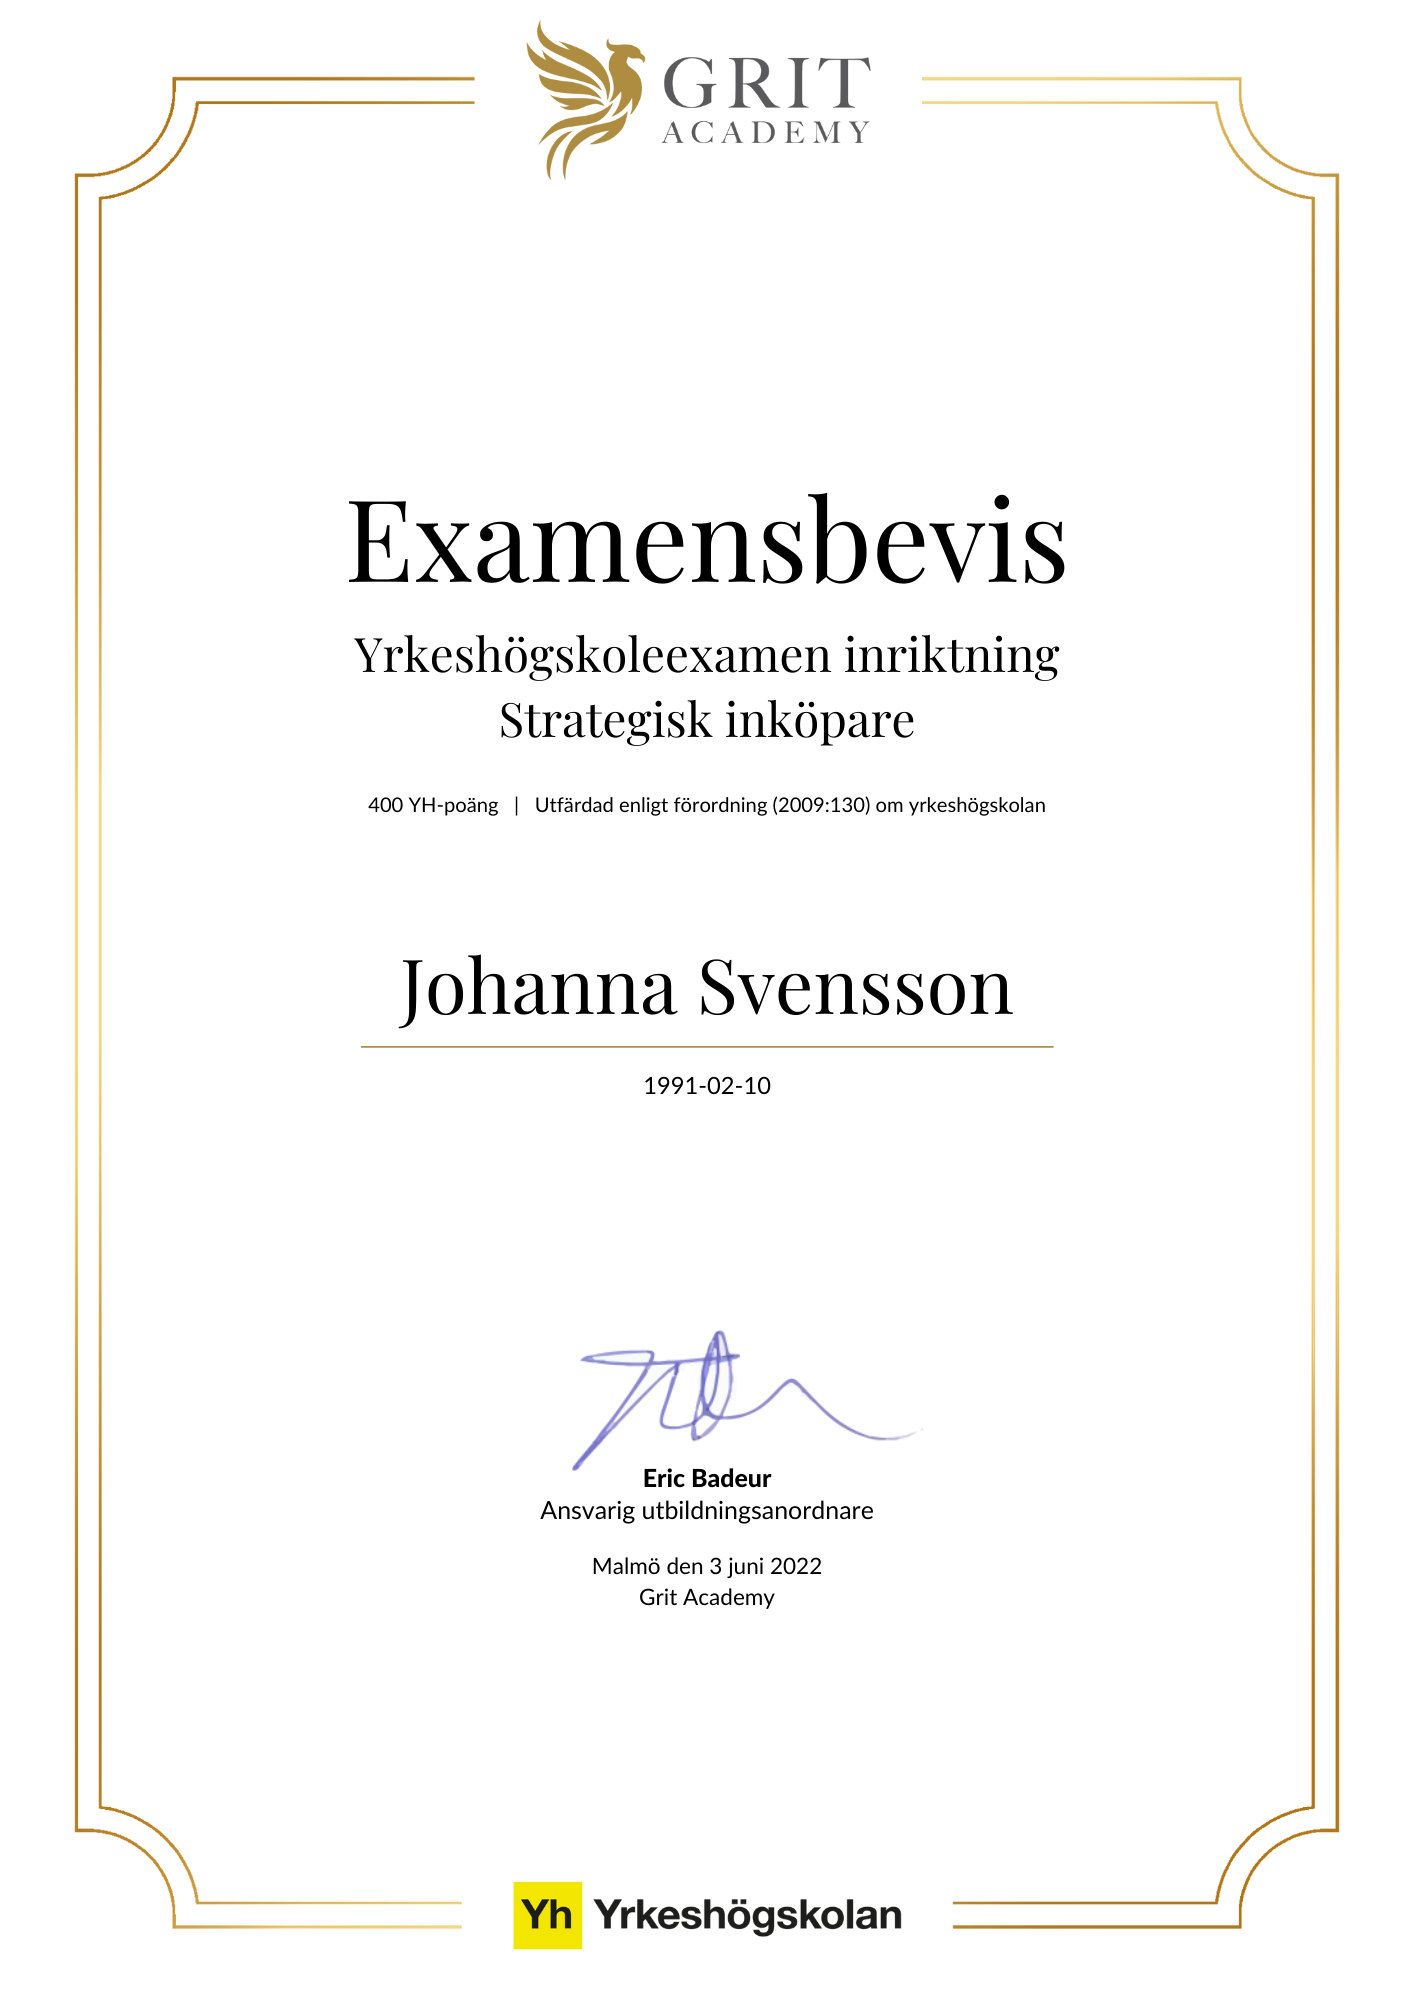 Examensbevis Johanna Svensson - 1